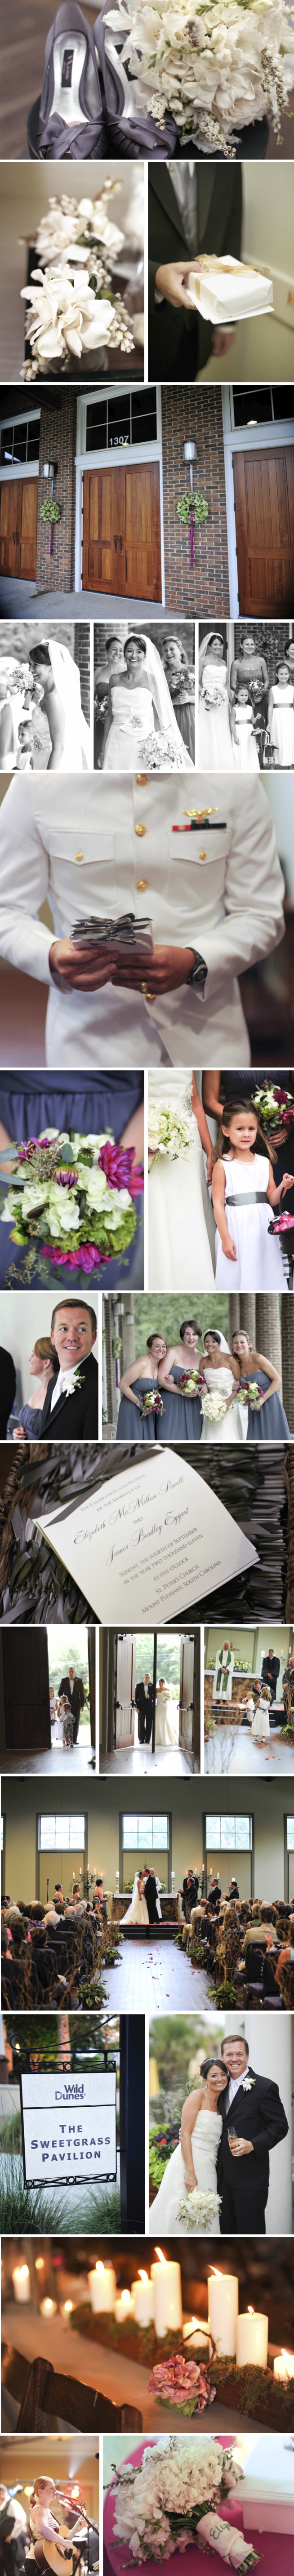 Wedding Blogs | wedding pictures